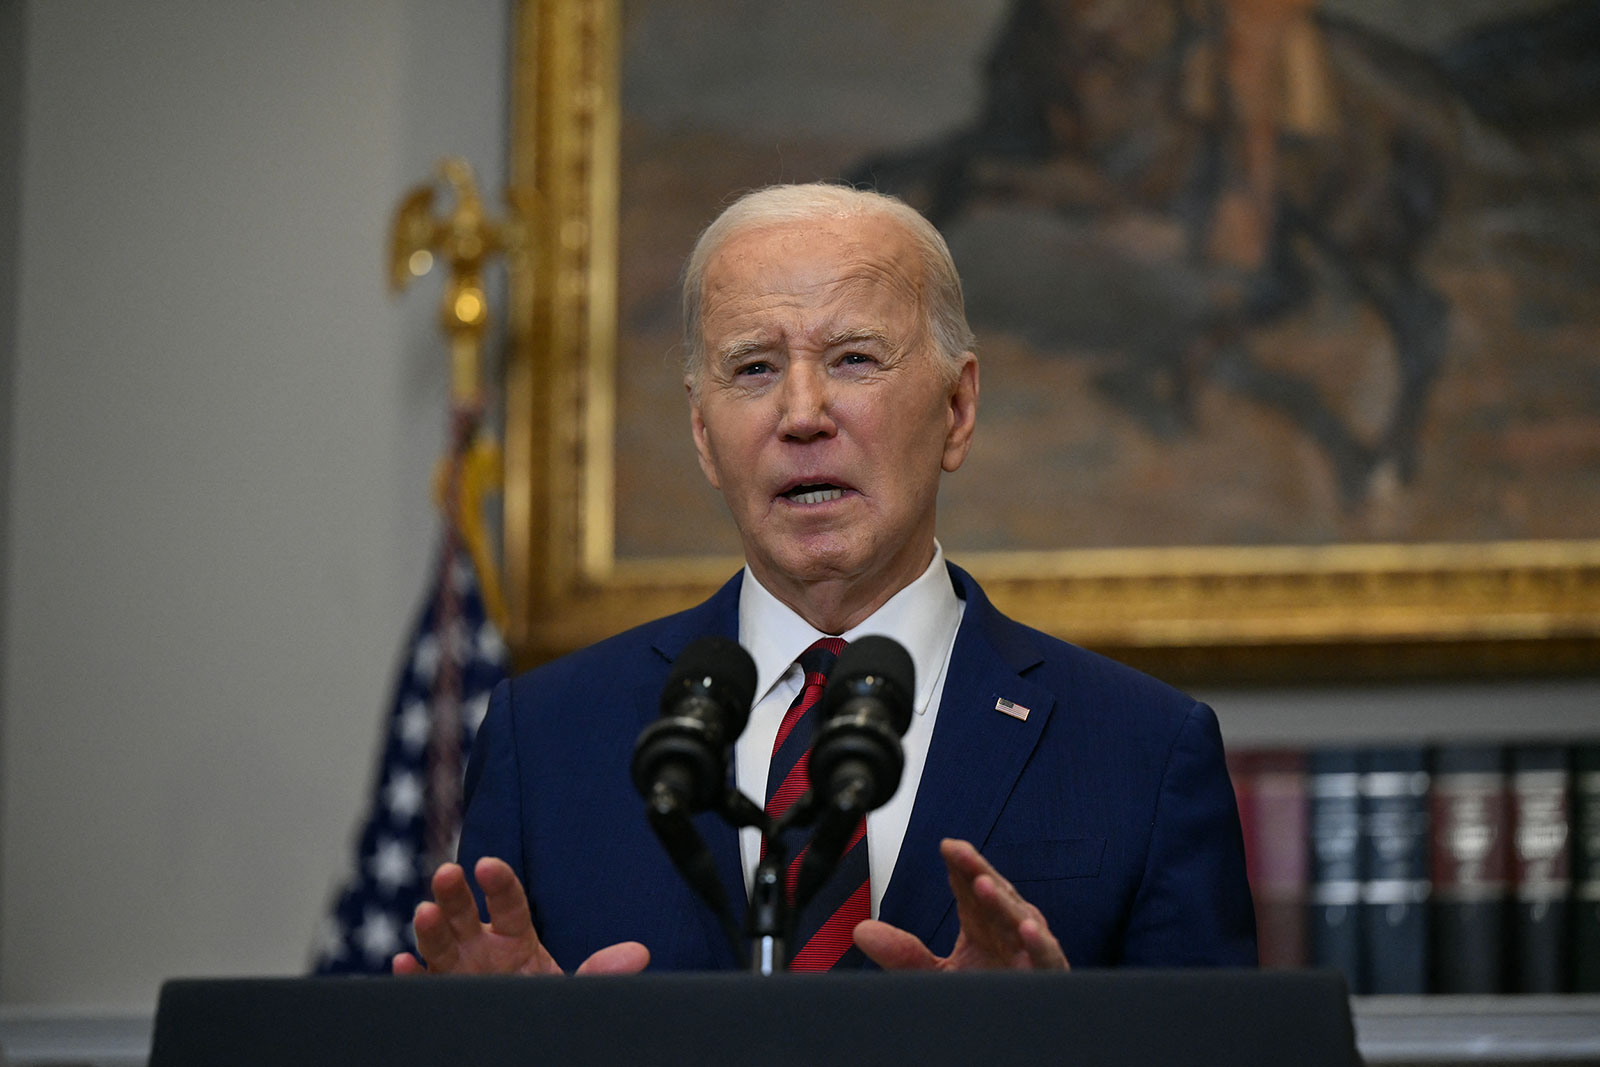 President Joe Biden gives remarks on the Baltimore bridge collapse at the White House in Washington, DC, on Tuesday.